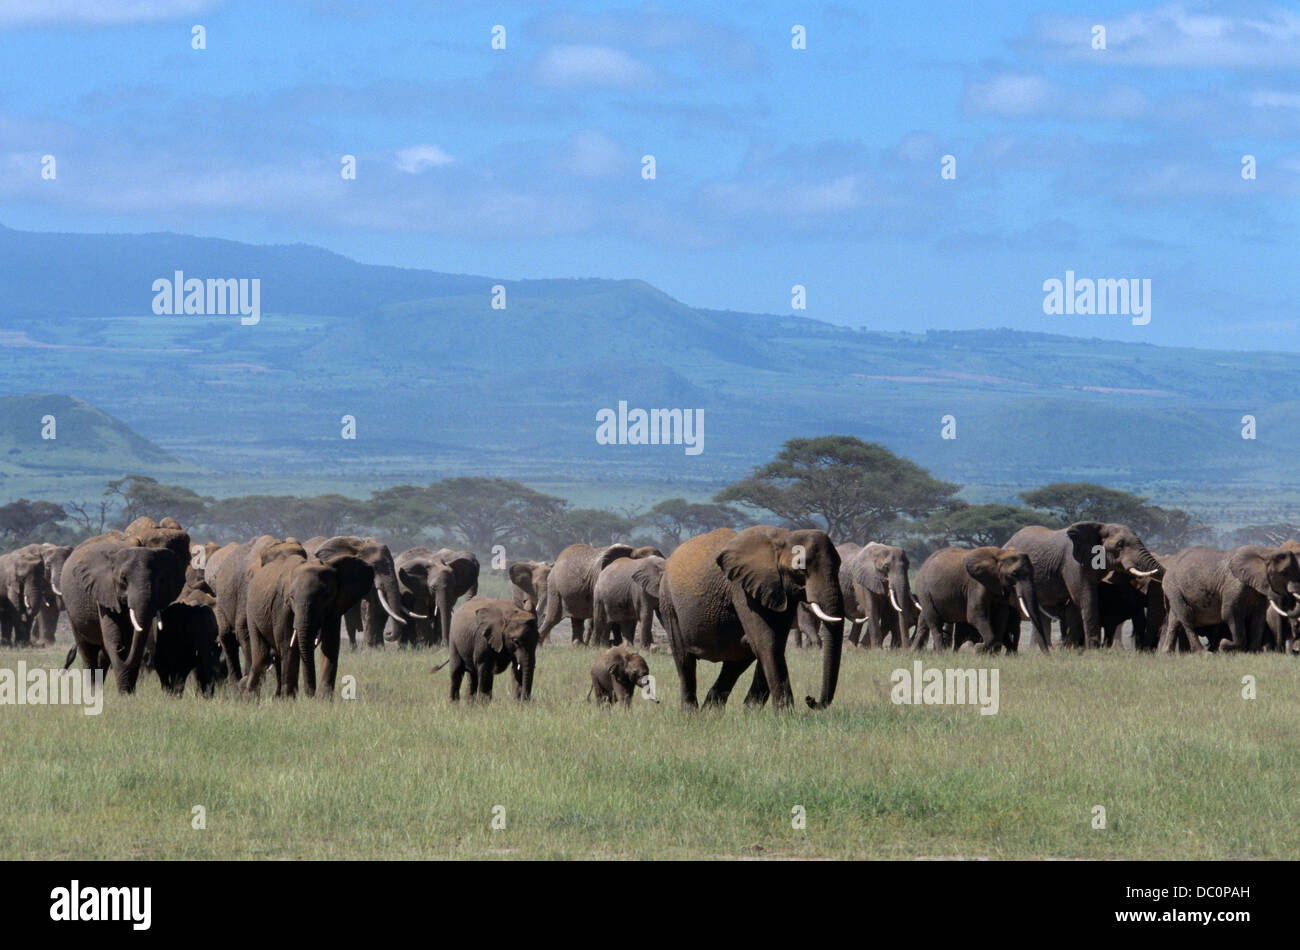 AMBOSELI NATIONAL PARK KENYA AFRICA HERD OF ELEPHANTS WALKING ACROSS PLAINS FROM MT. KILIMANJARO Stock Photo